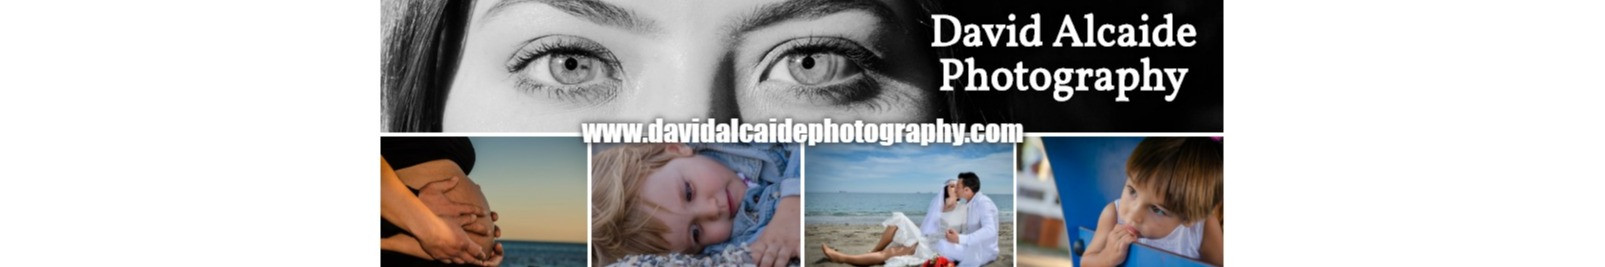 David Alcaide Photography